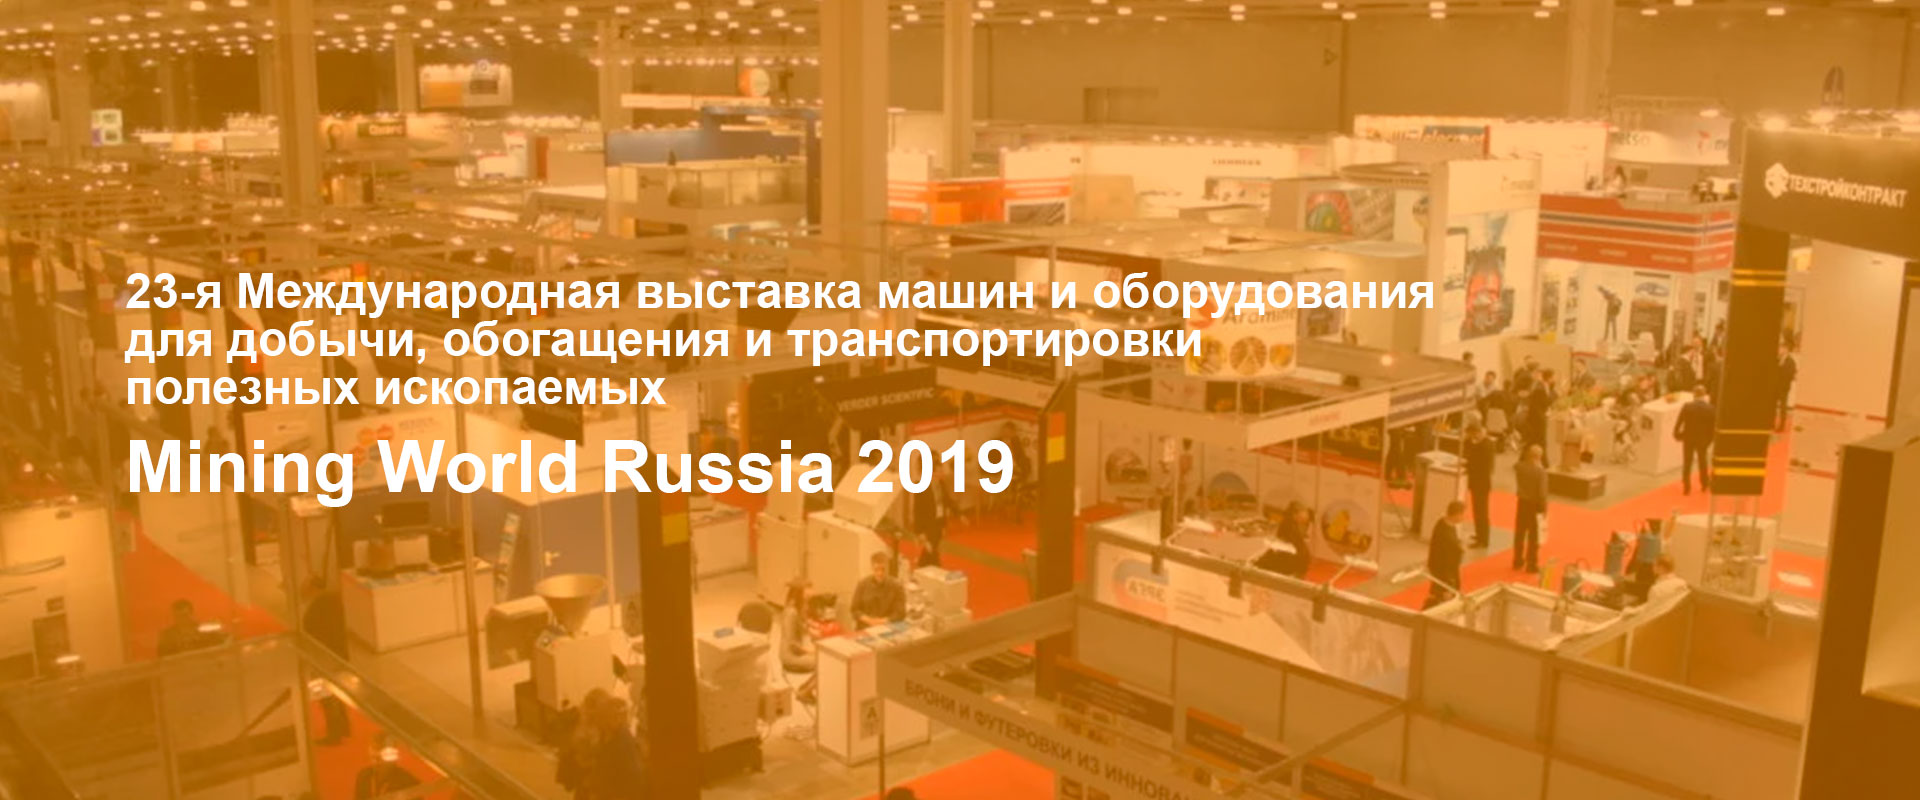 Международная выставка Mining World Russia 2019